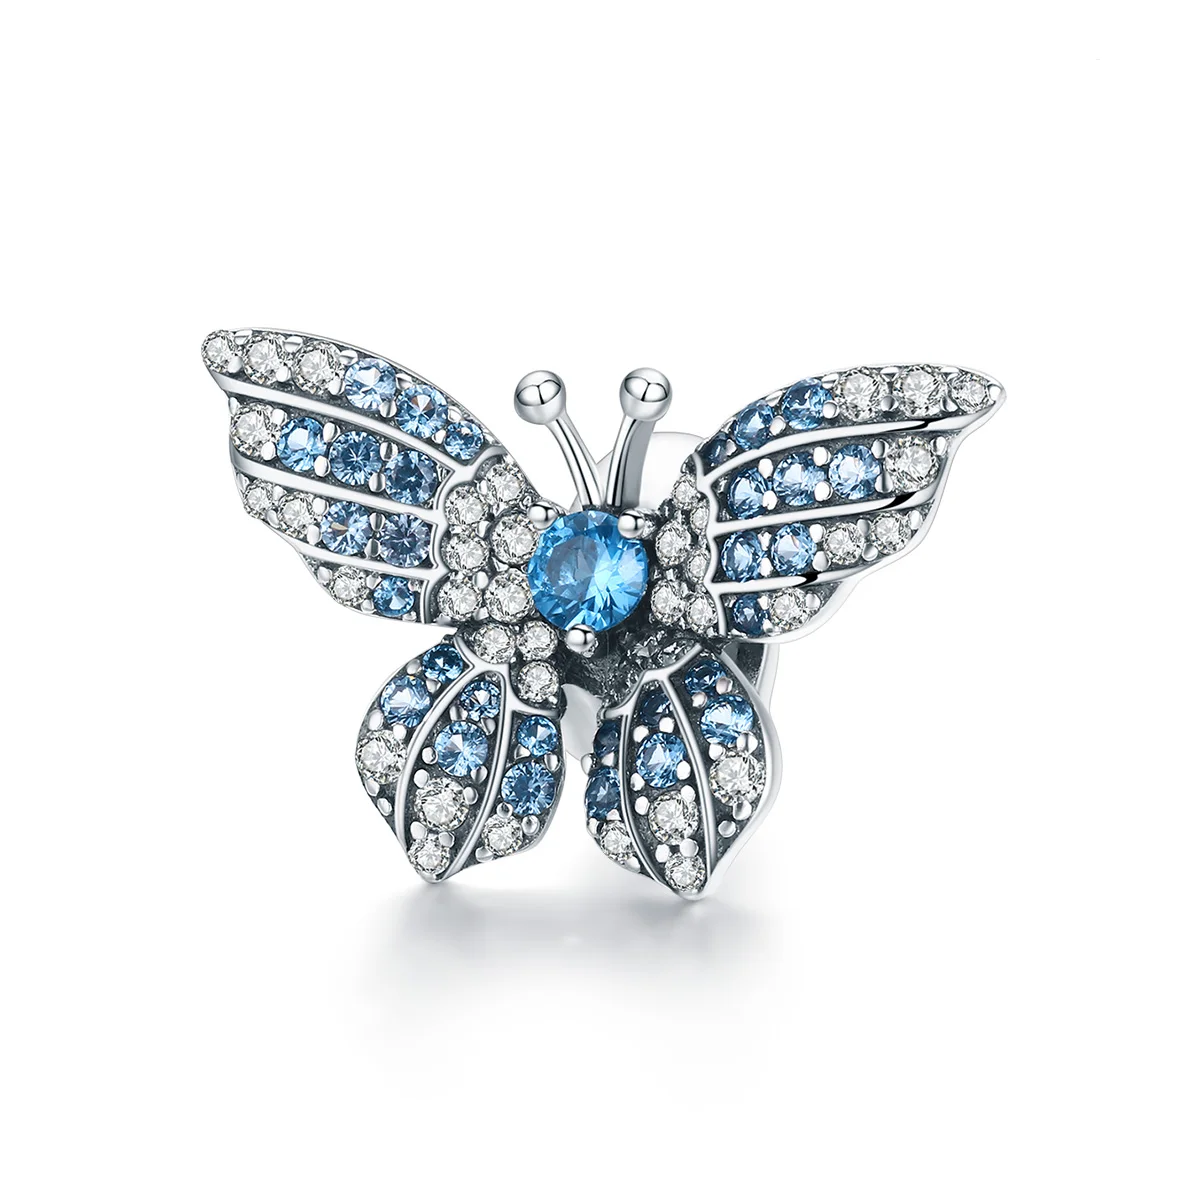 Bamoer s925 Sterling Silver LOVER Charm With Blue Zircon Fit Bracelet Jewelry 